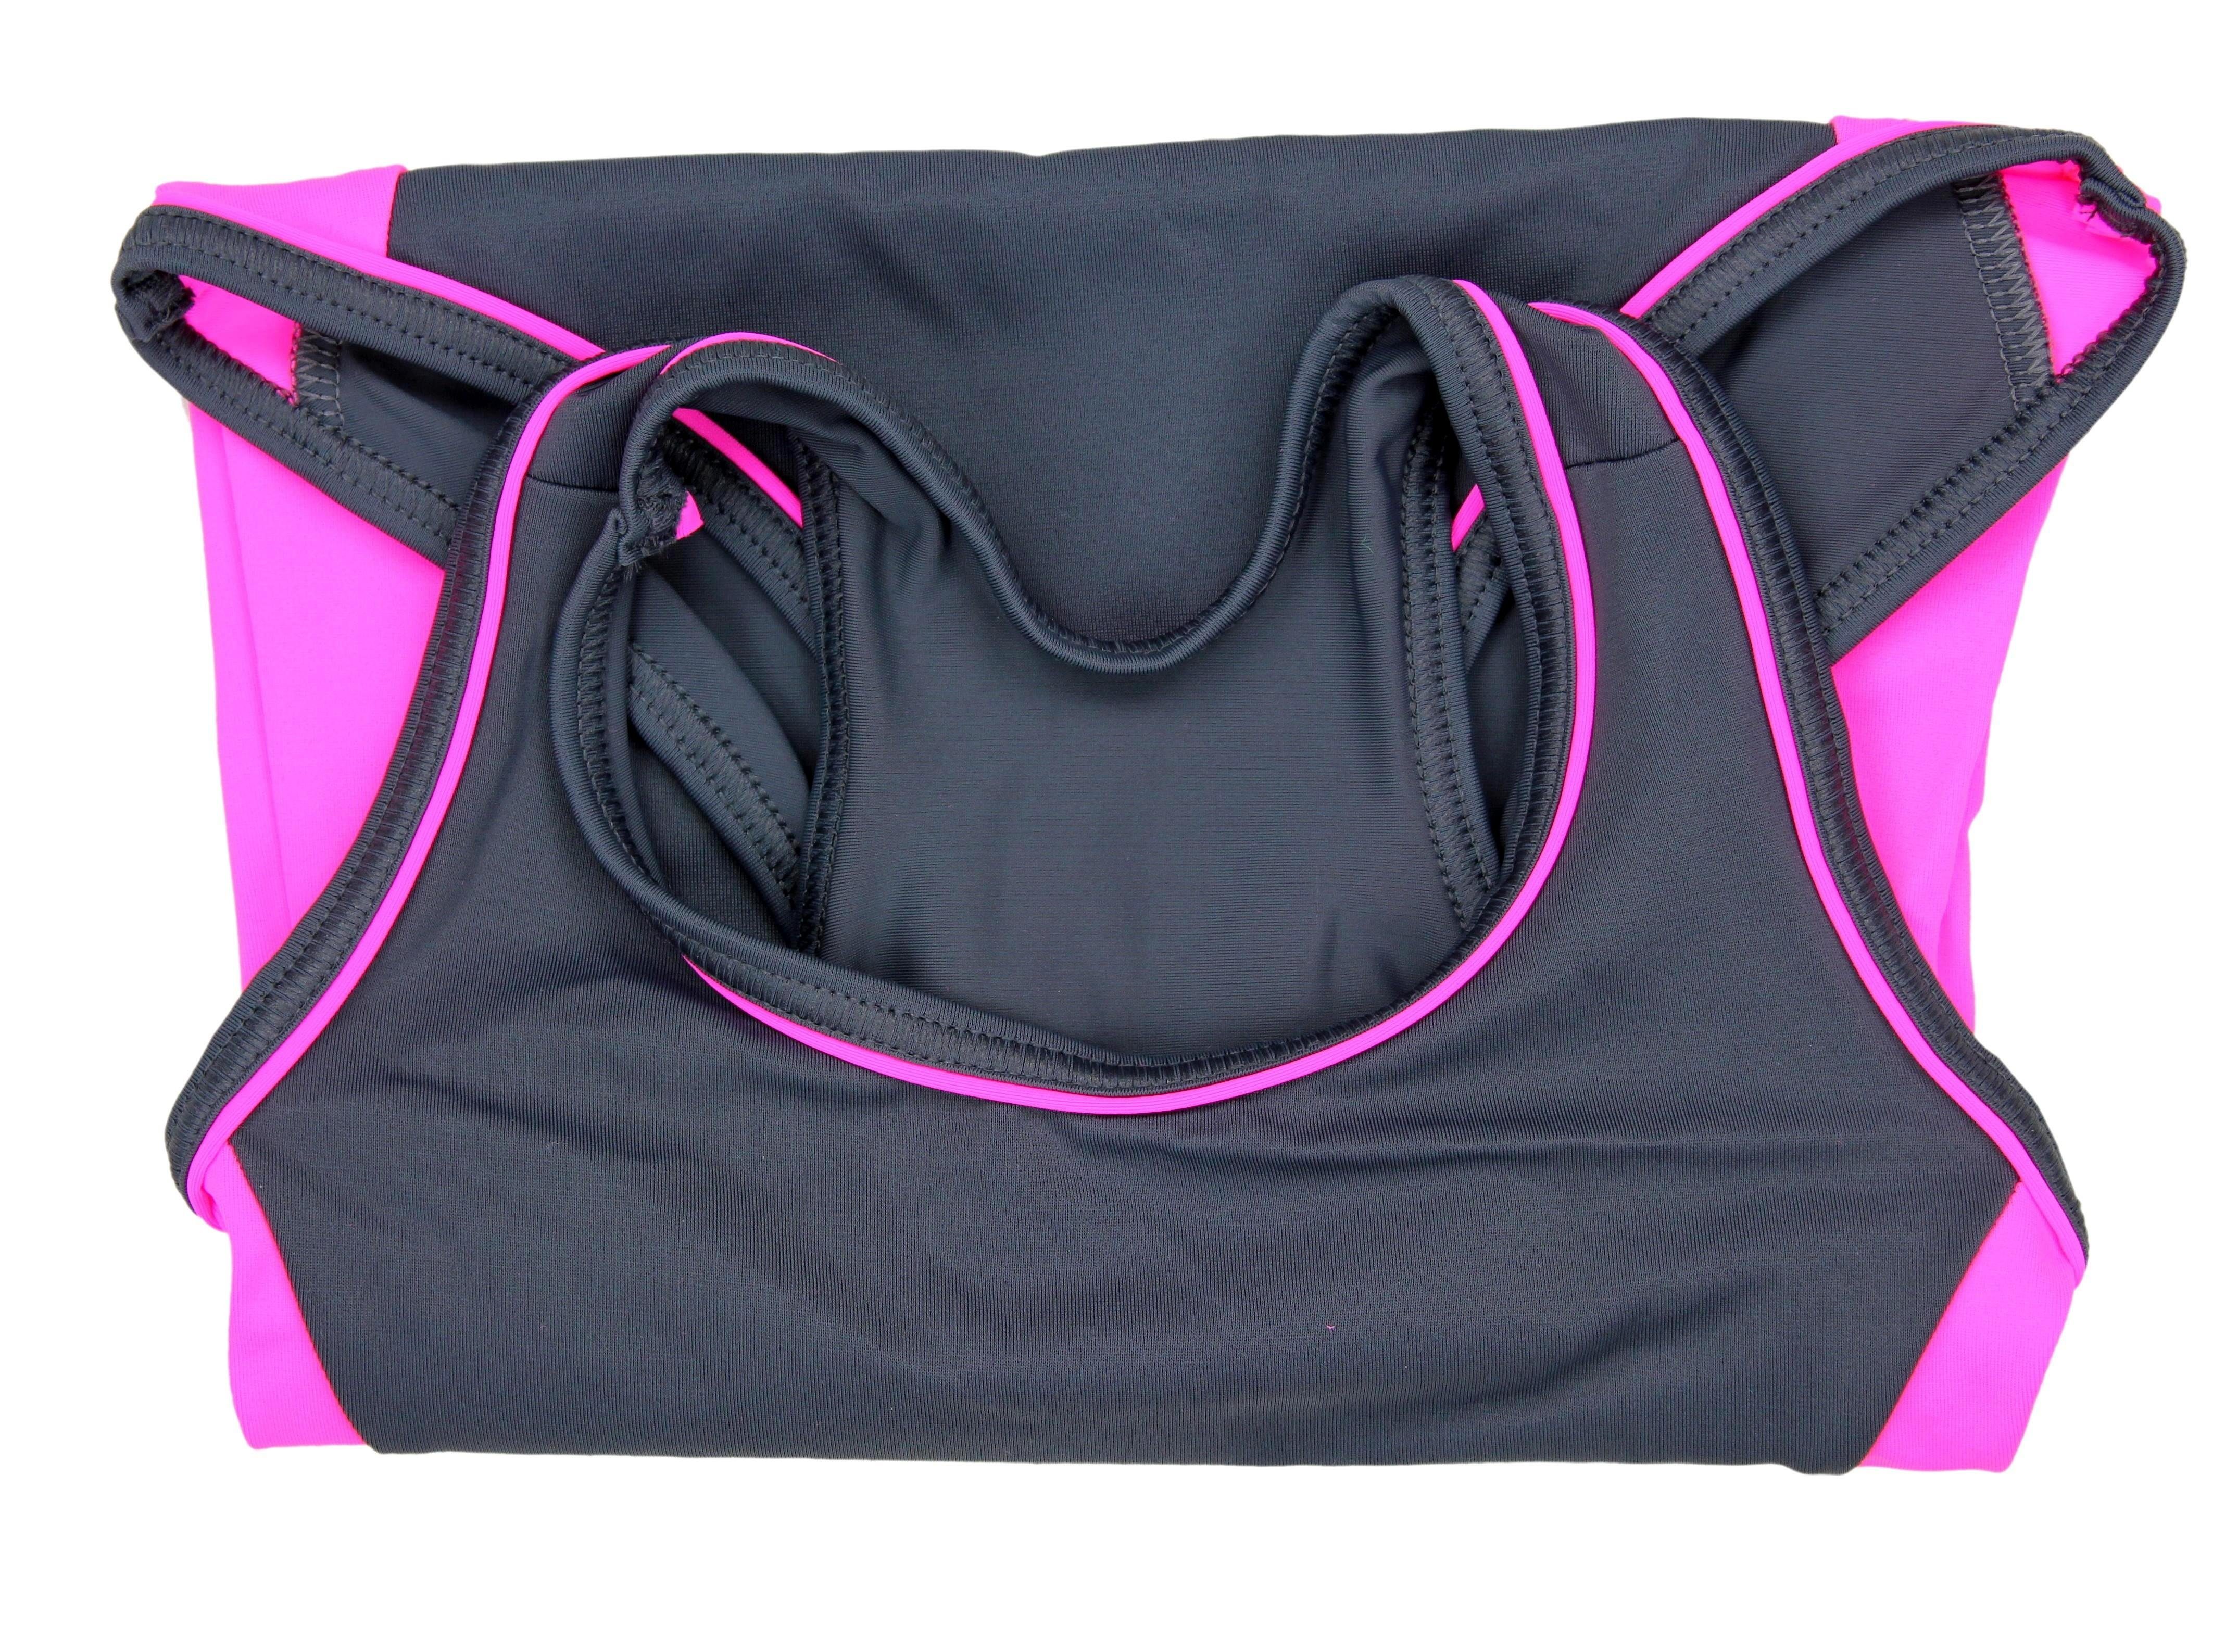 Aquarti Schwimmanzug Aquarti Mädchen Badeanzug mit / Schwimmanzug Grau Sportlich Pink Racerback